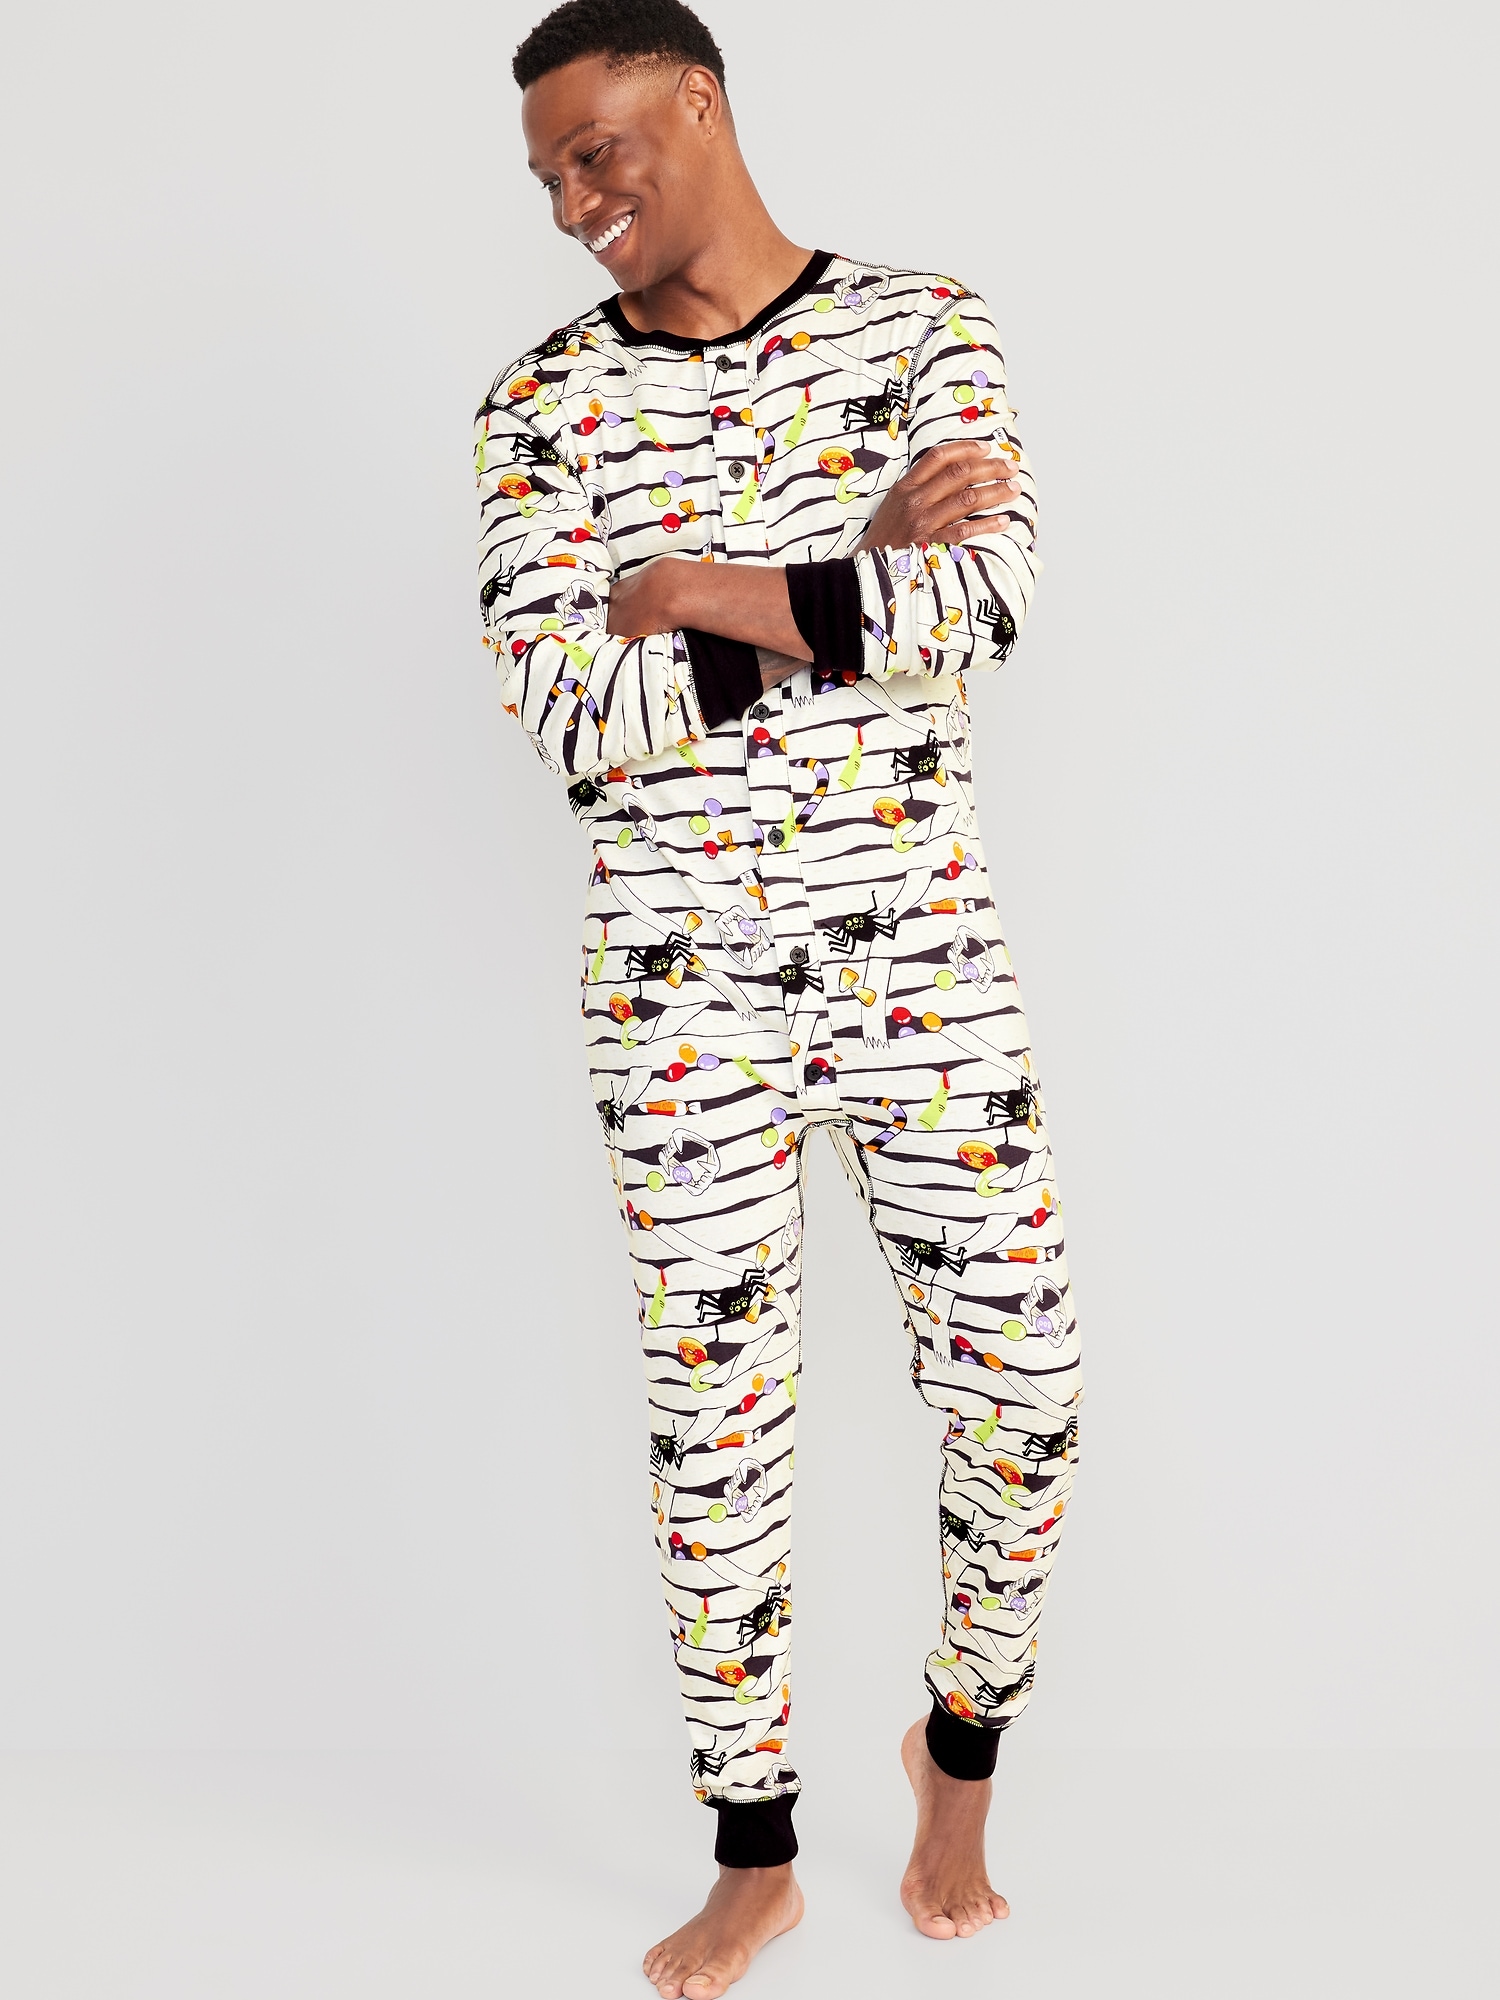 Matching Halloween One-Piece Pajamas for Men